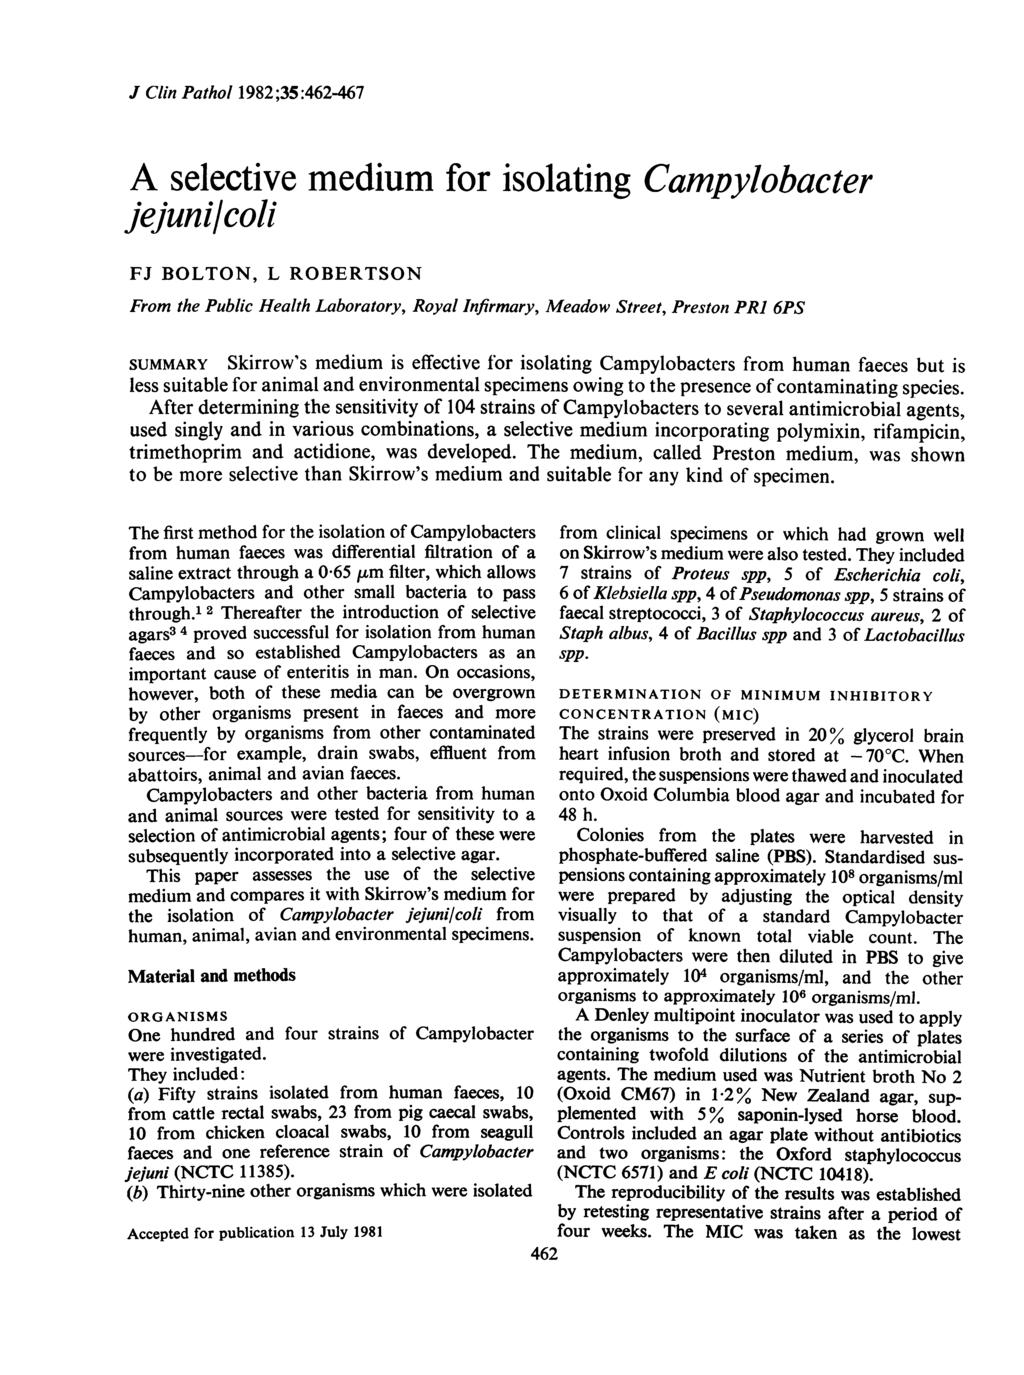 J Clin Pathol 1982;35:462-467 A selective medium for isolating Campylobacter jejuni/coli FJ BOLTON, L ROBERTSON From the Public Health Laboratory, Royal Infirmary, Meadow Street, Preston PRI 6PS